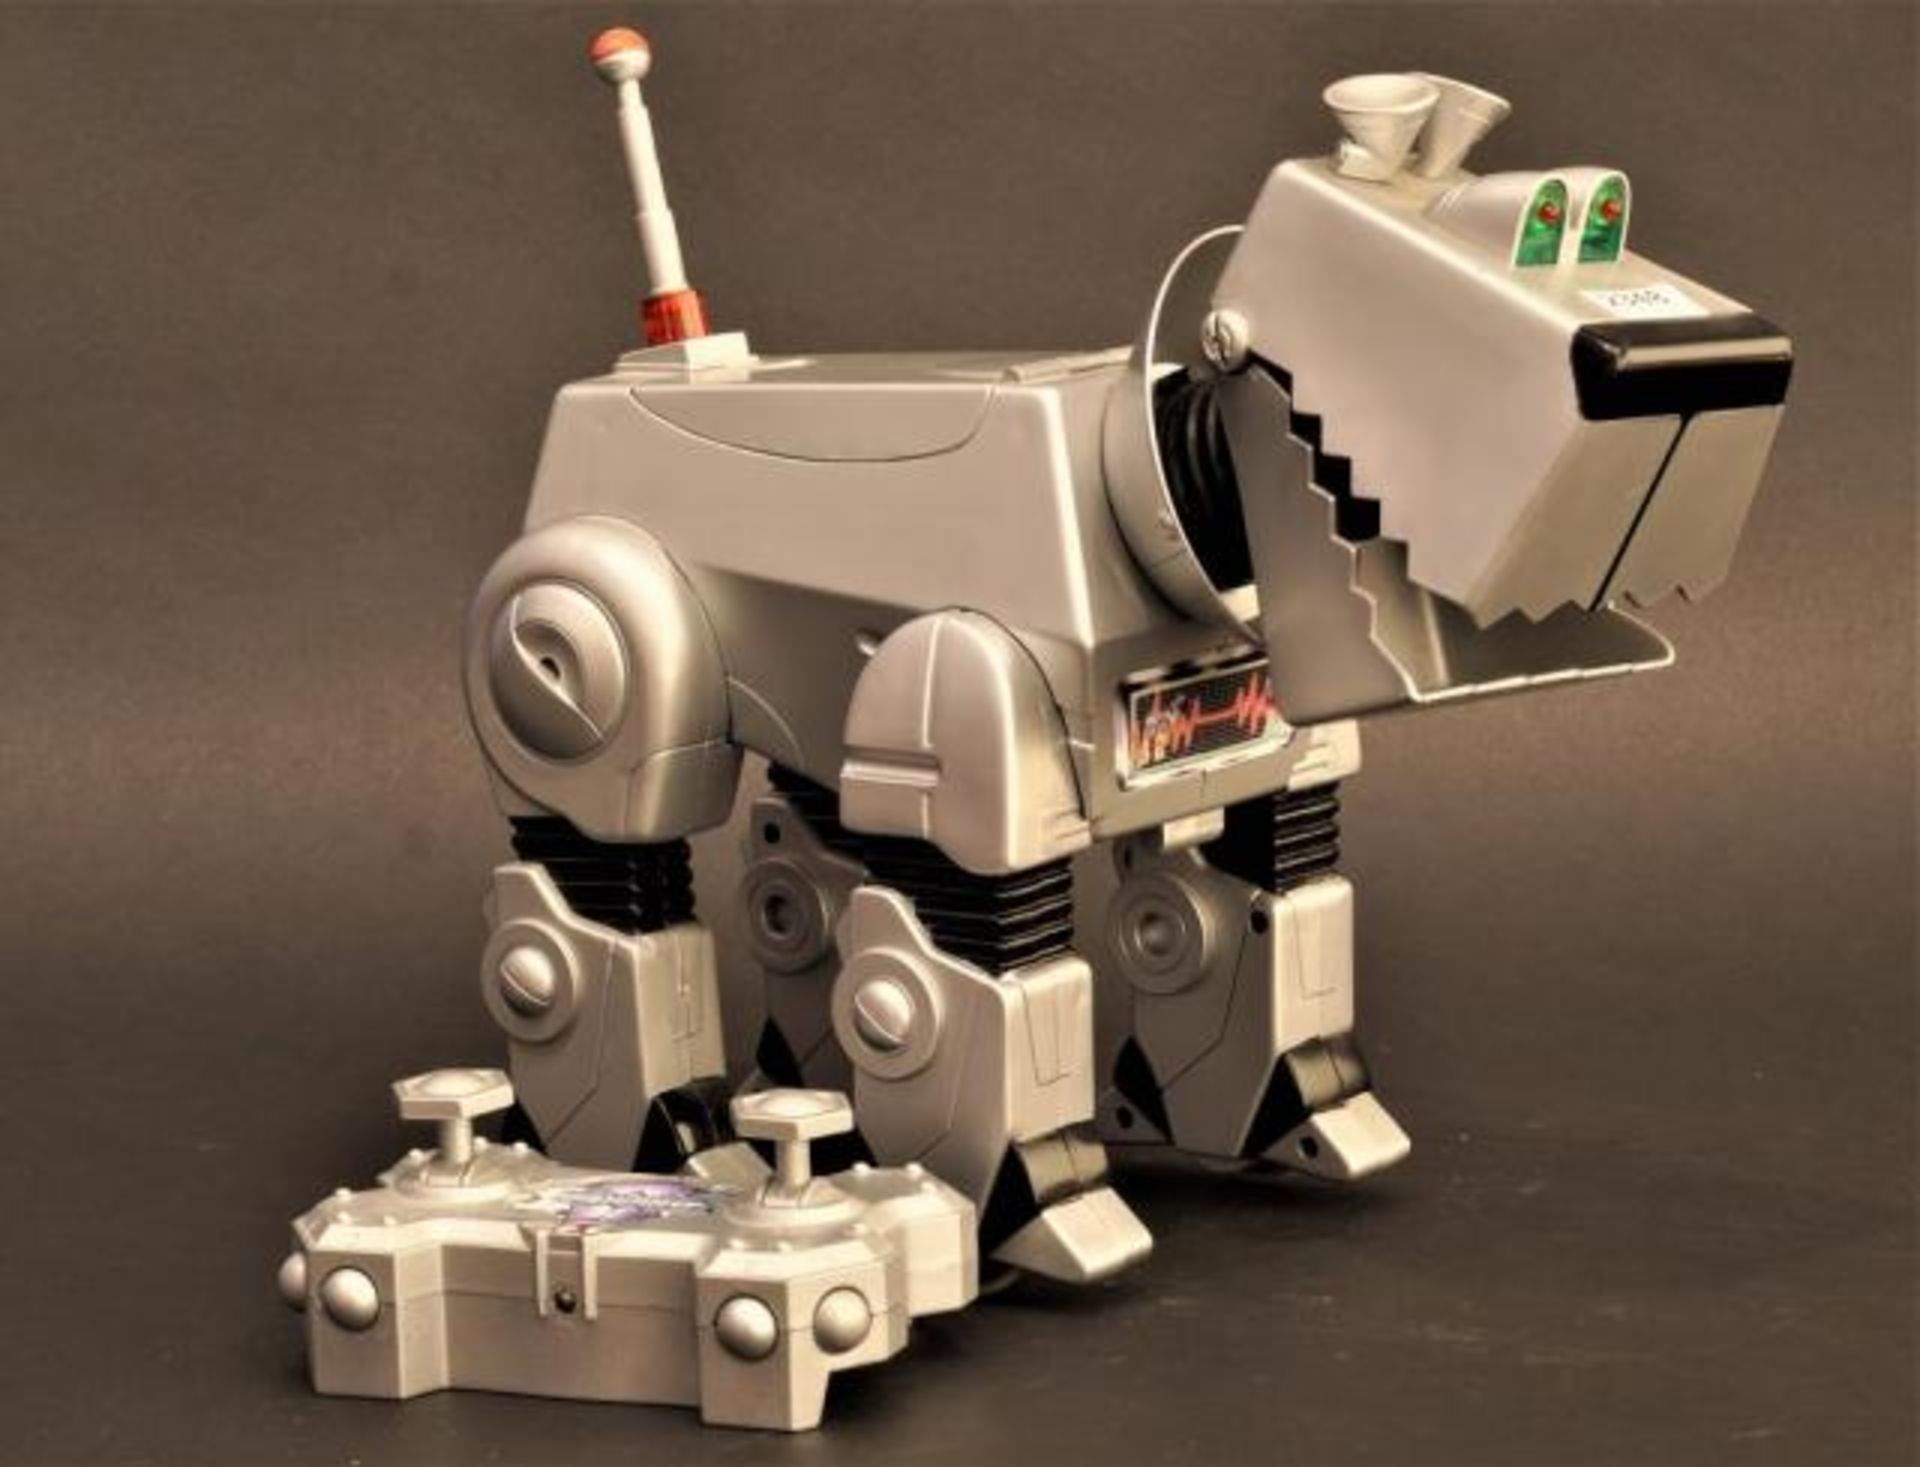 Robot dog with remote control, "Mega Byte", h. 29 cm